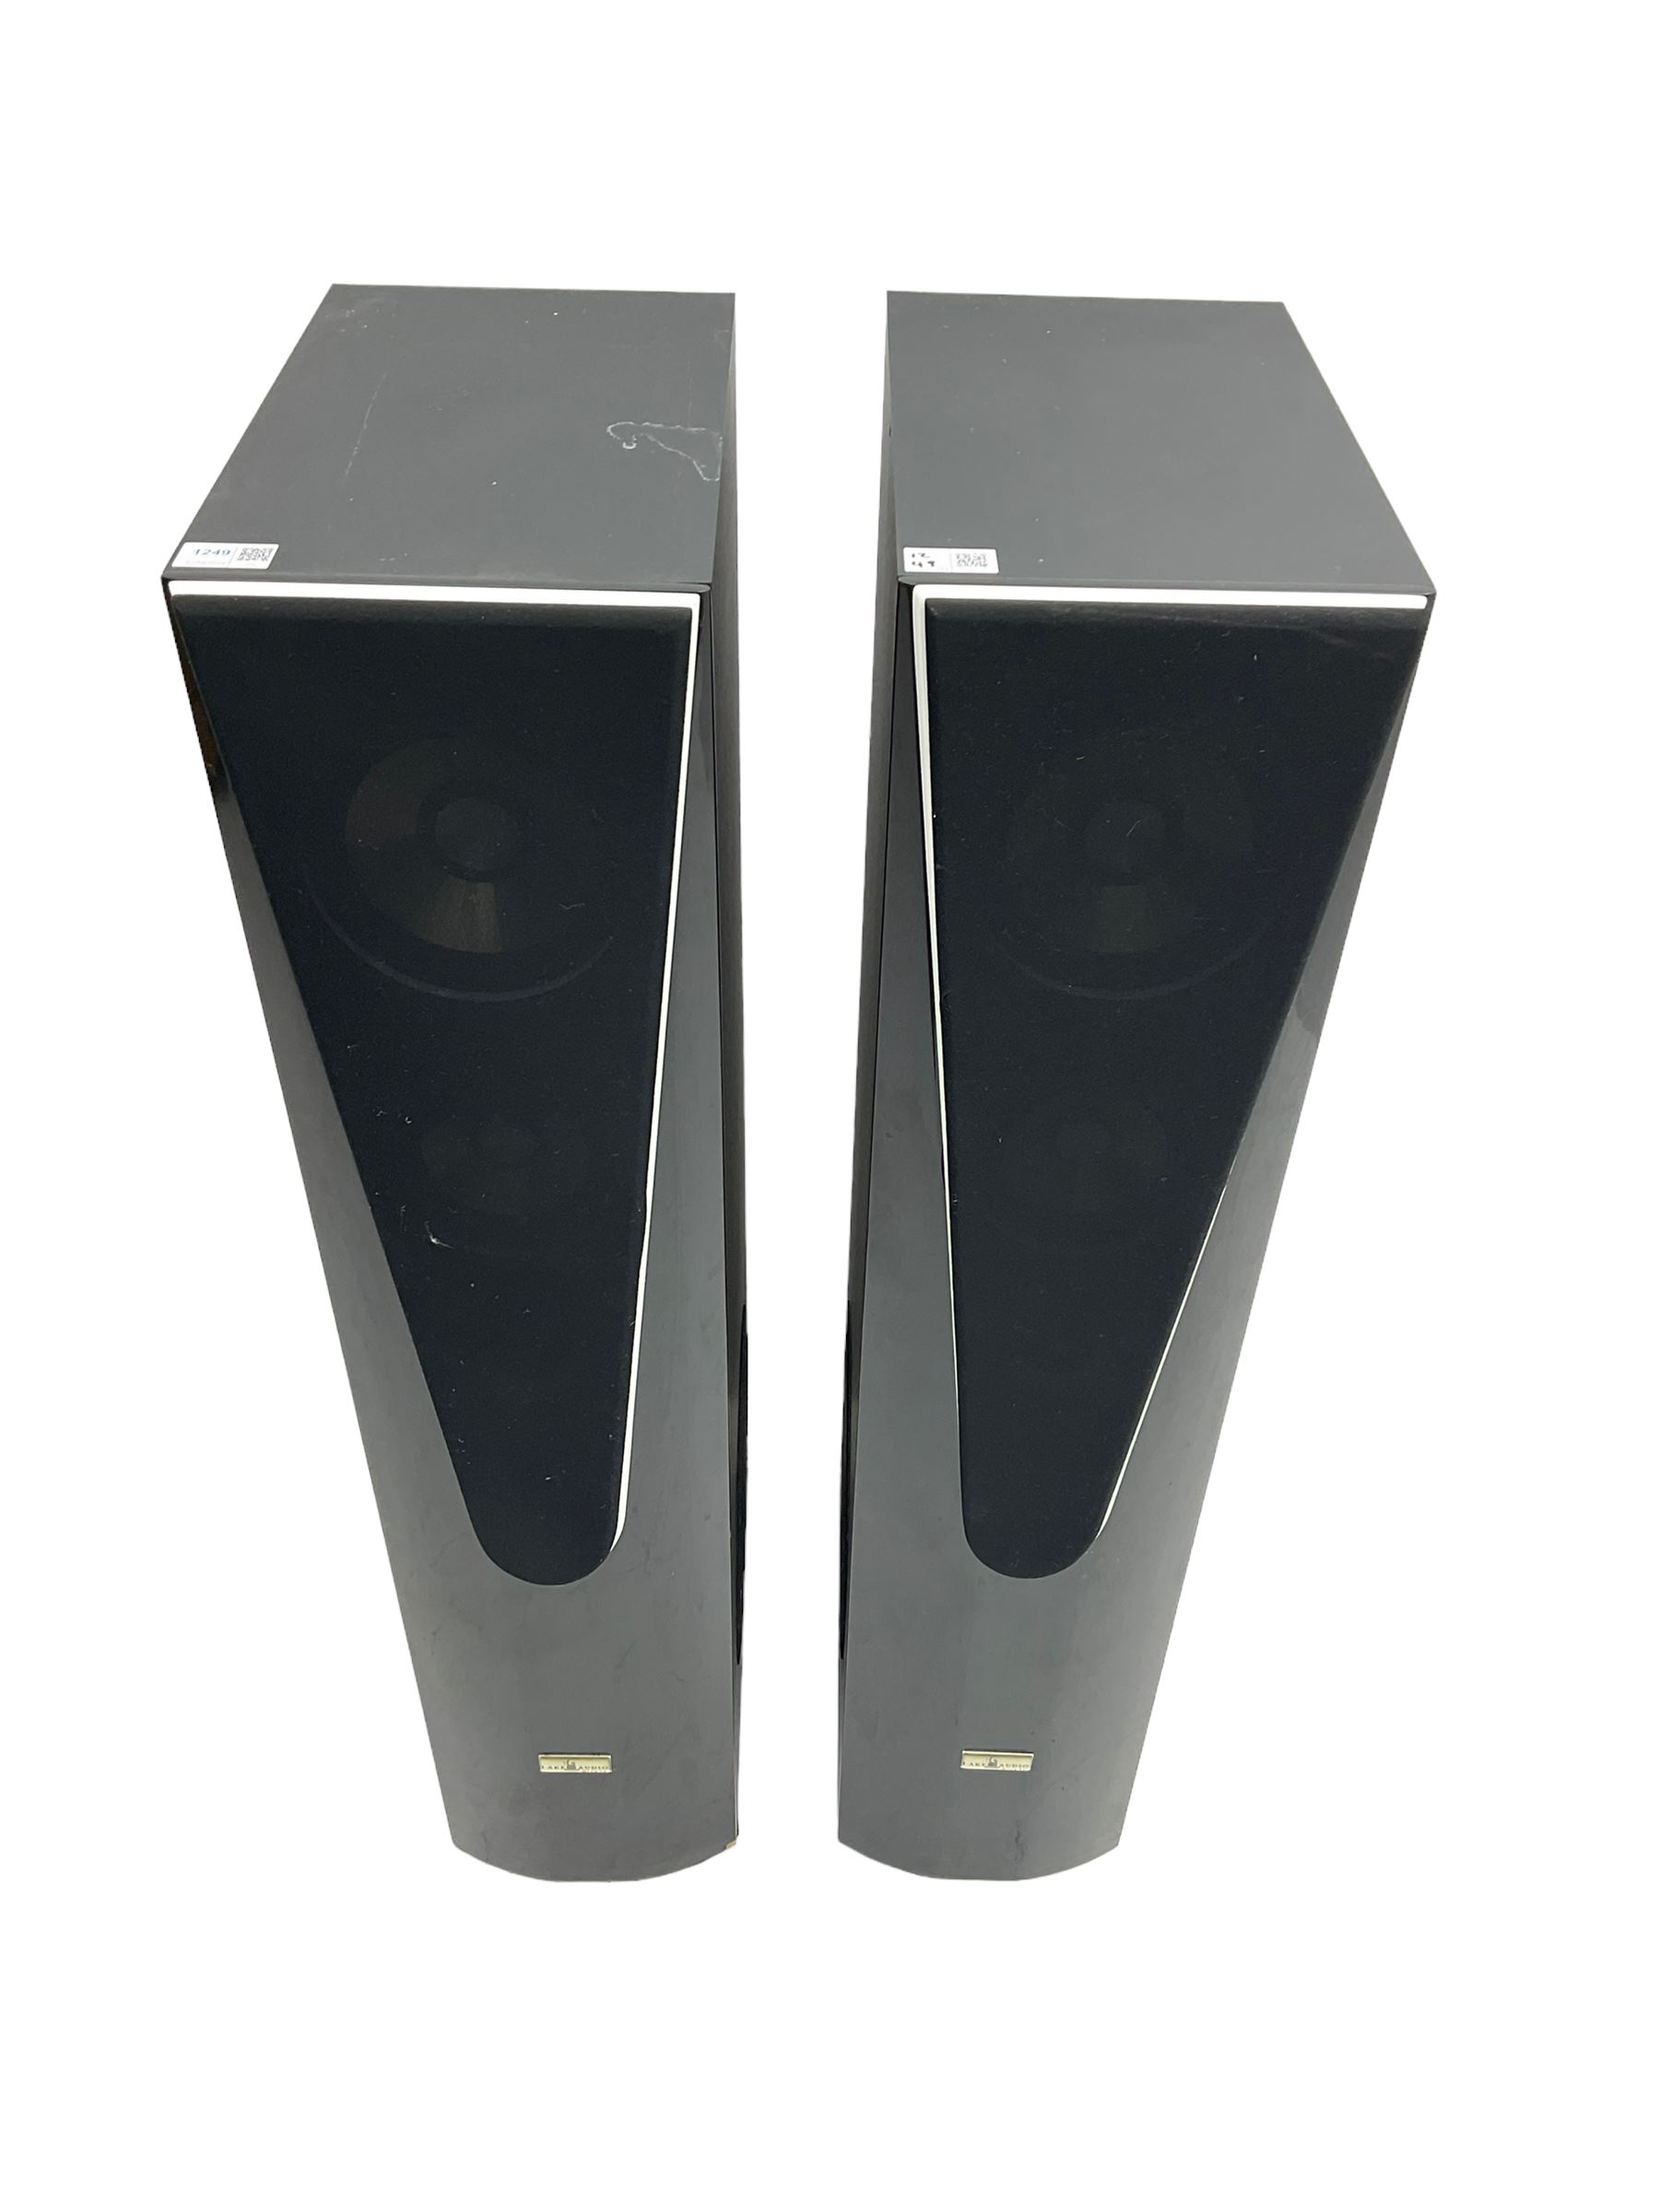 Pair Lake Audio 120W floorstanding speakers in black finish - Image 5 of 5